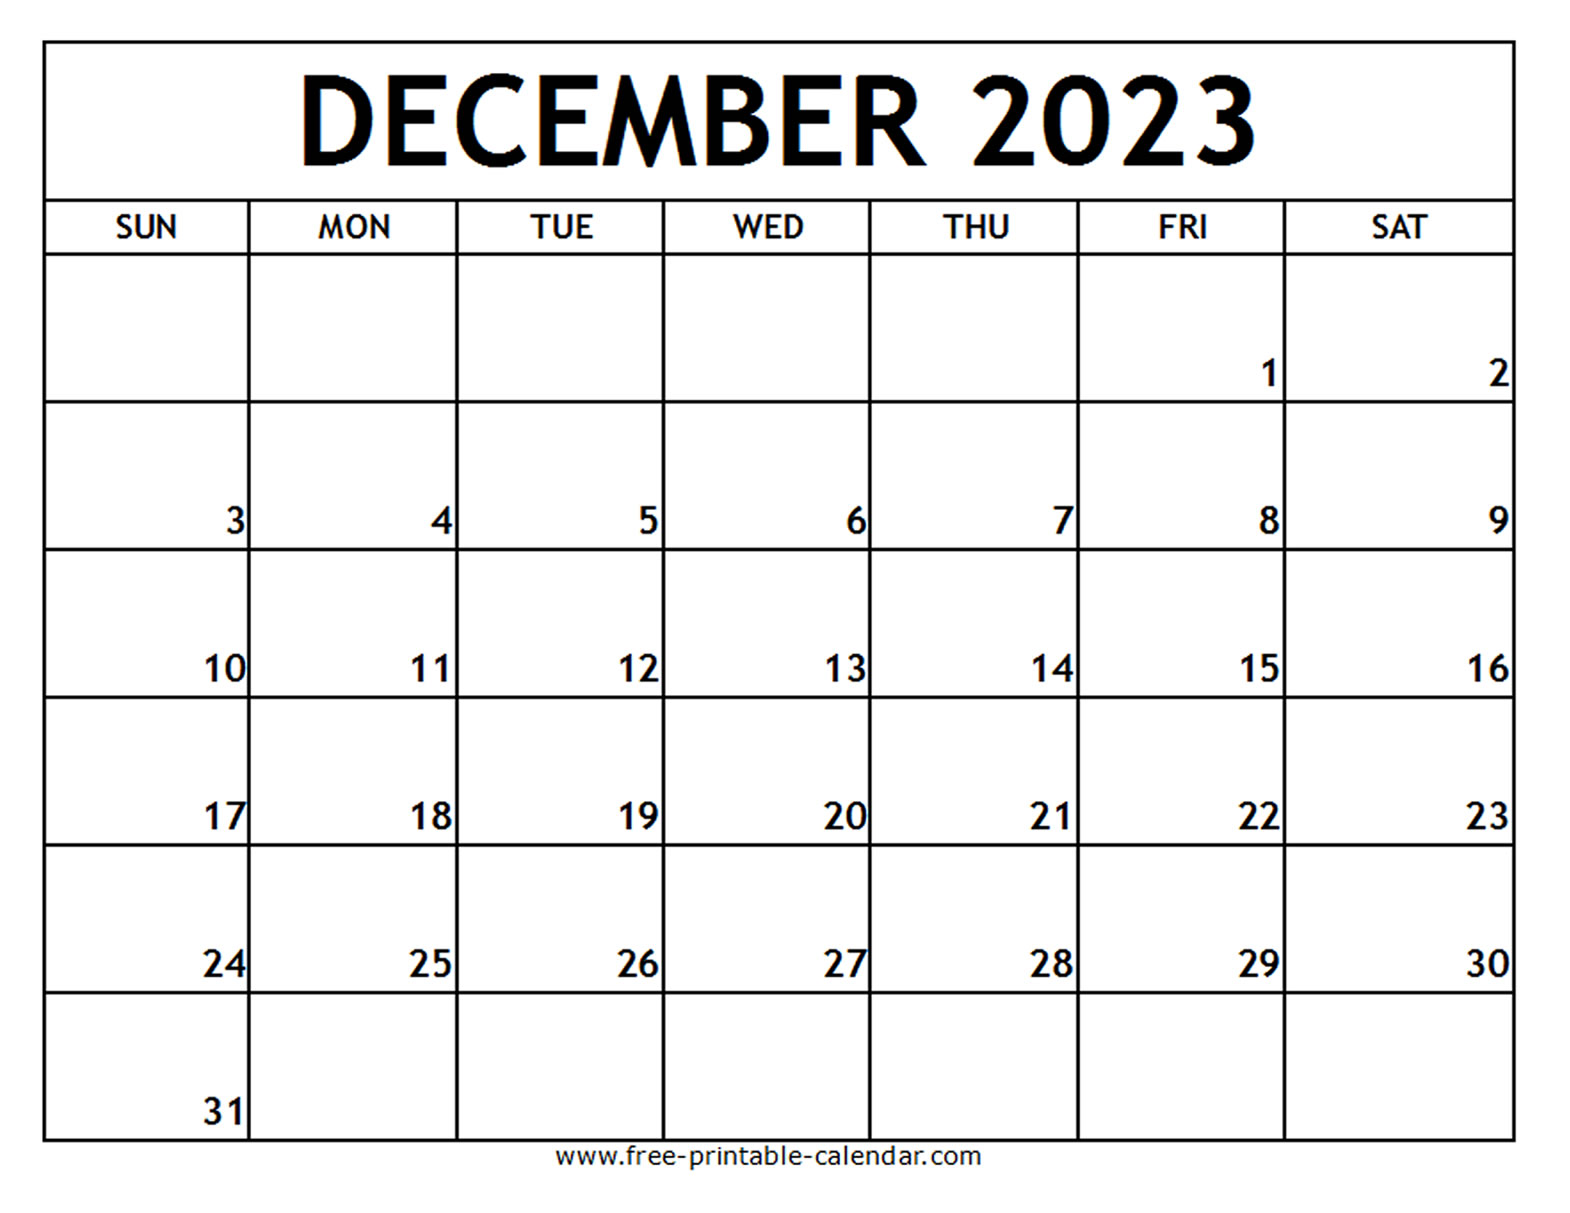 december-2023-calendar-for-printing-get-calendar-2023-update